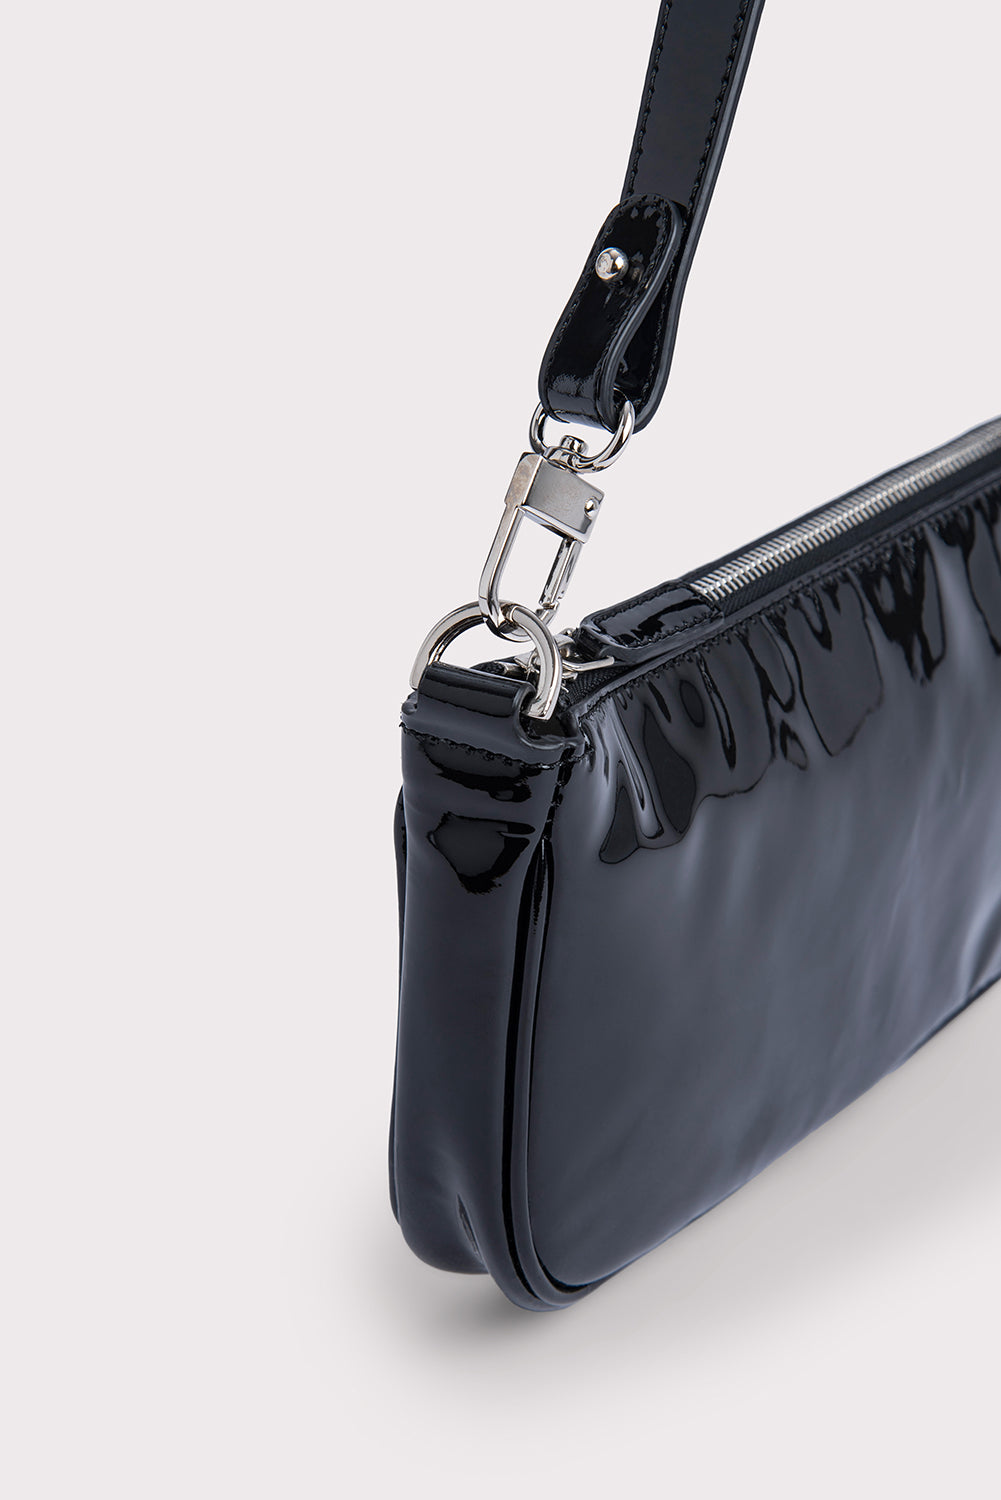 Rachel Black Patent Leather - BY FAR